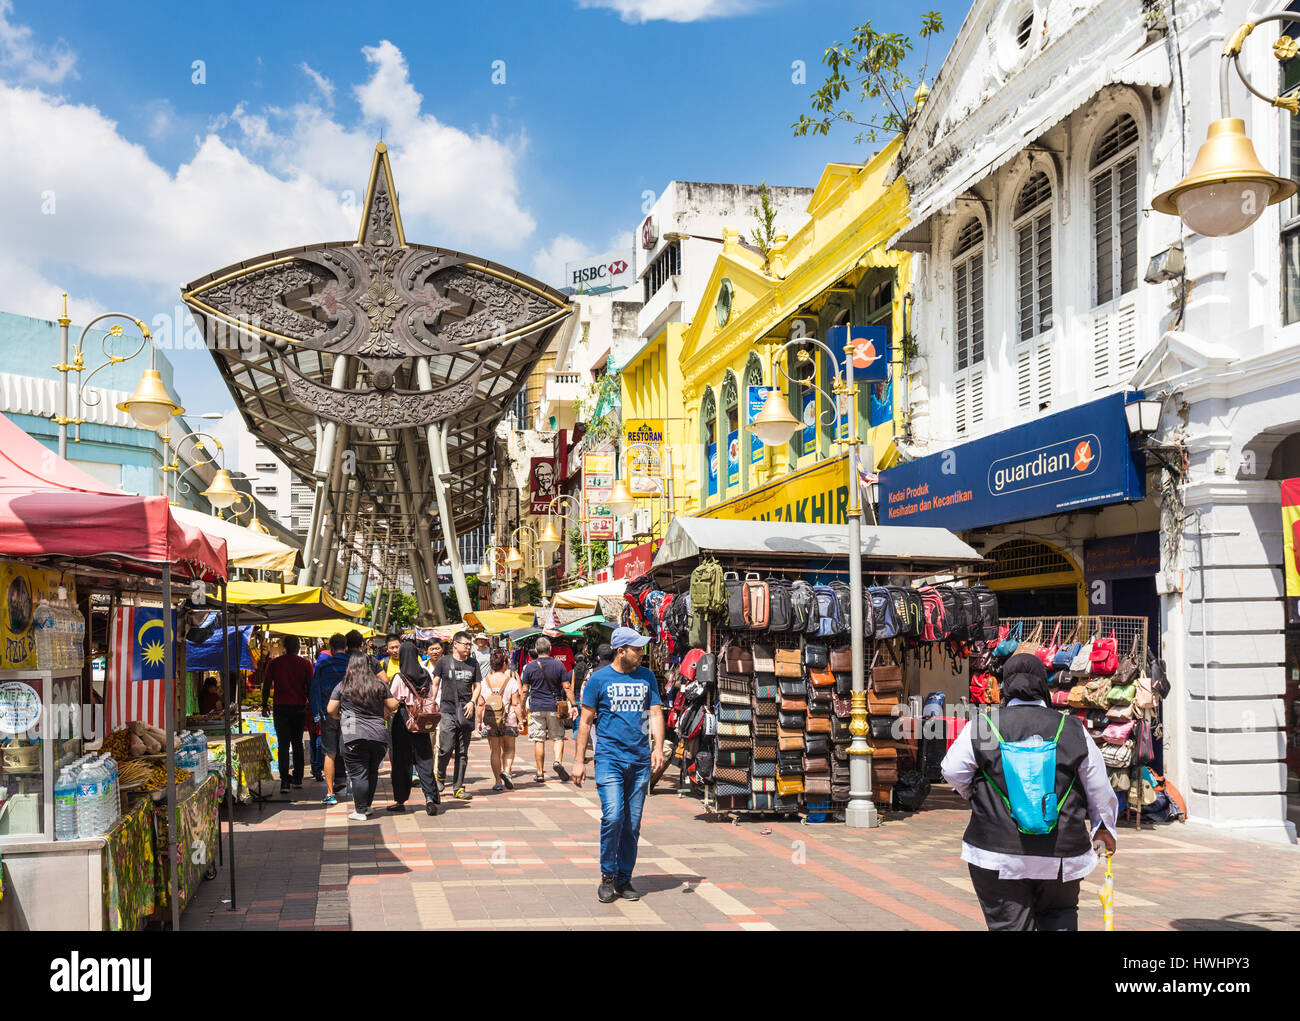 KUALA LUMPUR, MALAYSIA - JANUARY 14, 2017: People walk along the Kasturi walk and the Central Market in the heart of Kuala Lumpur Chinatown in Malaysi Stock Photo